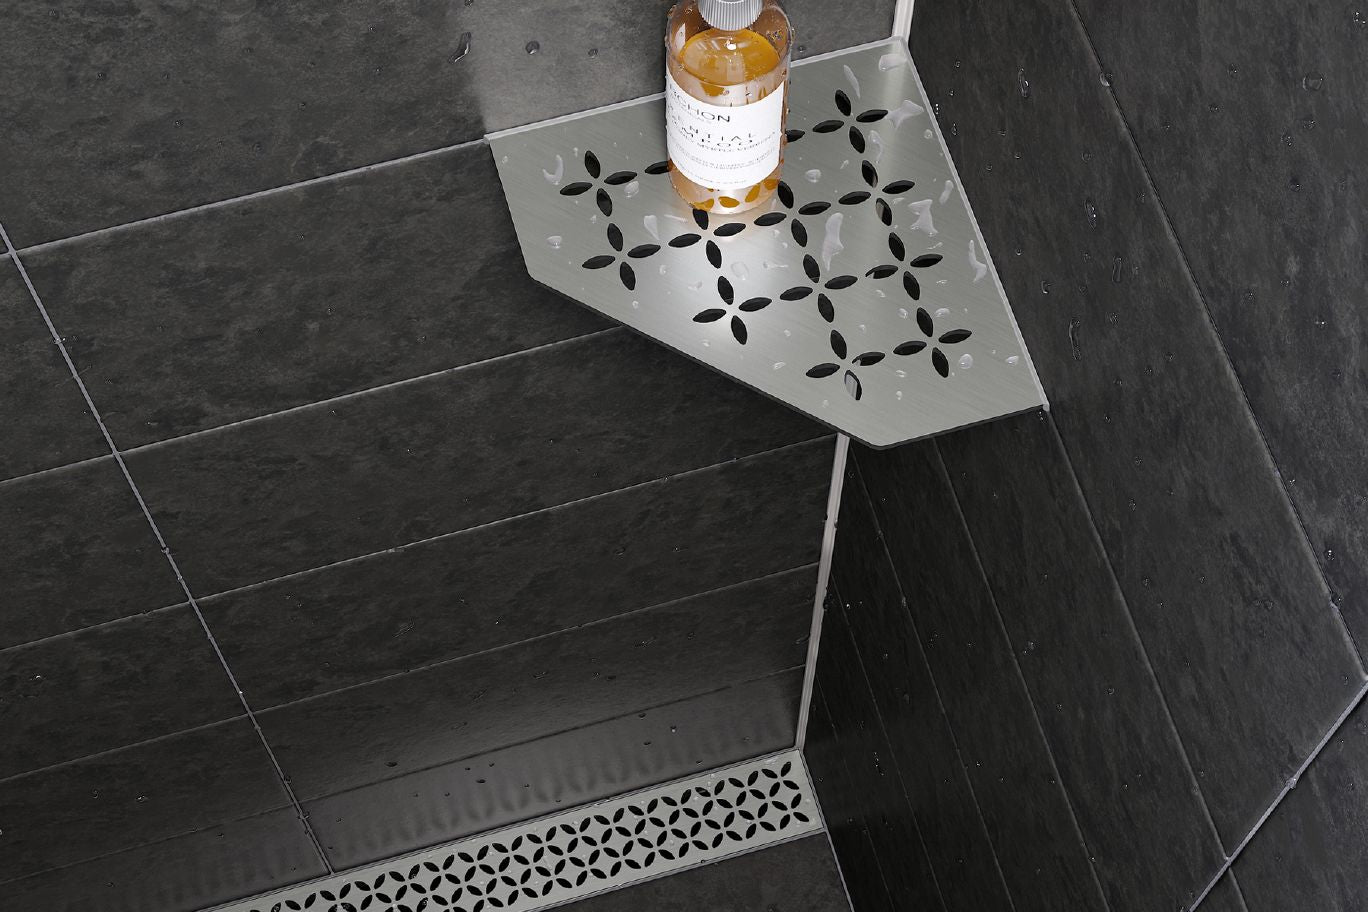 shower shelf - Proline Systems GmbH